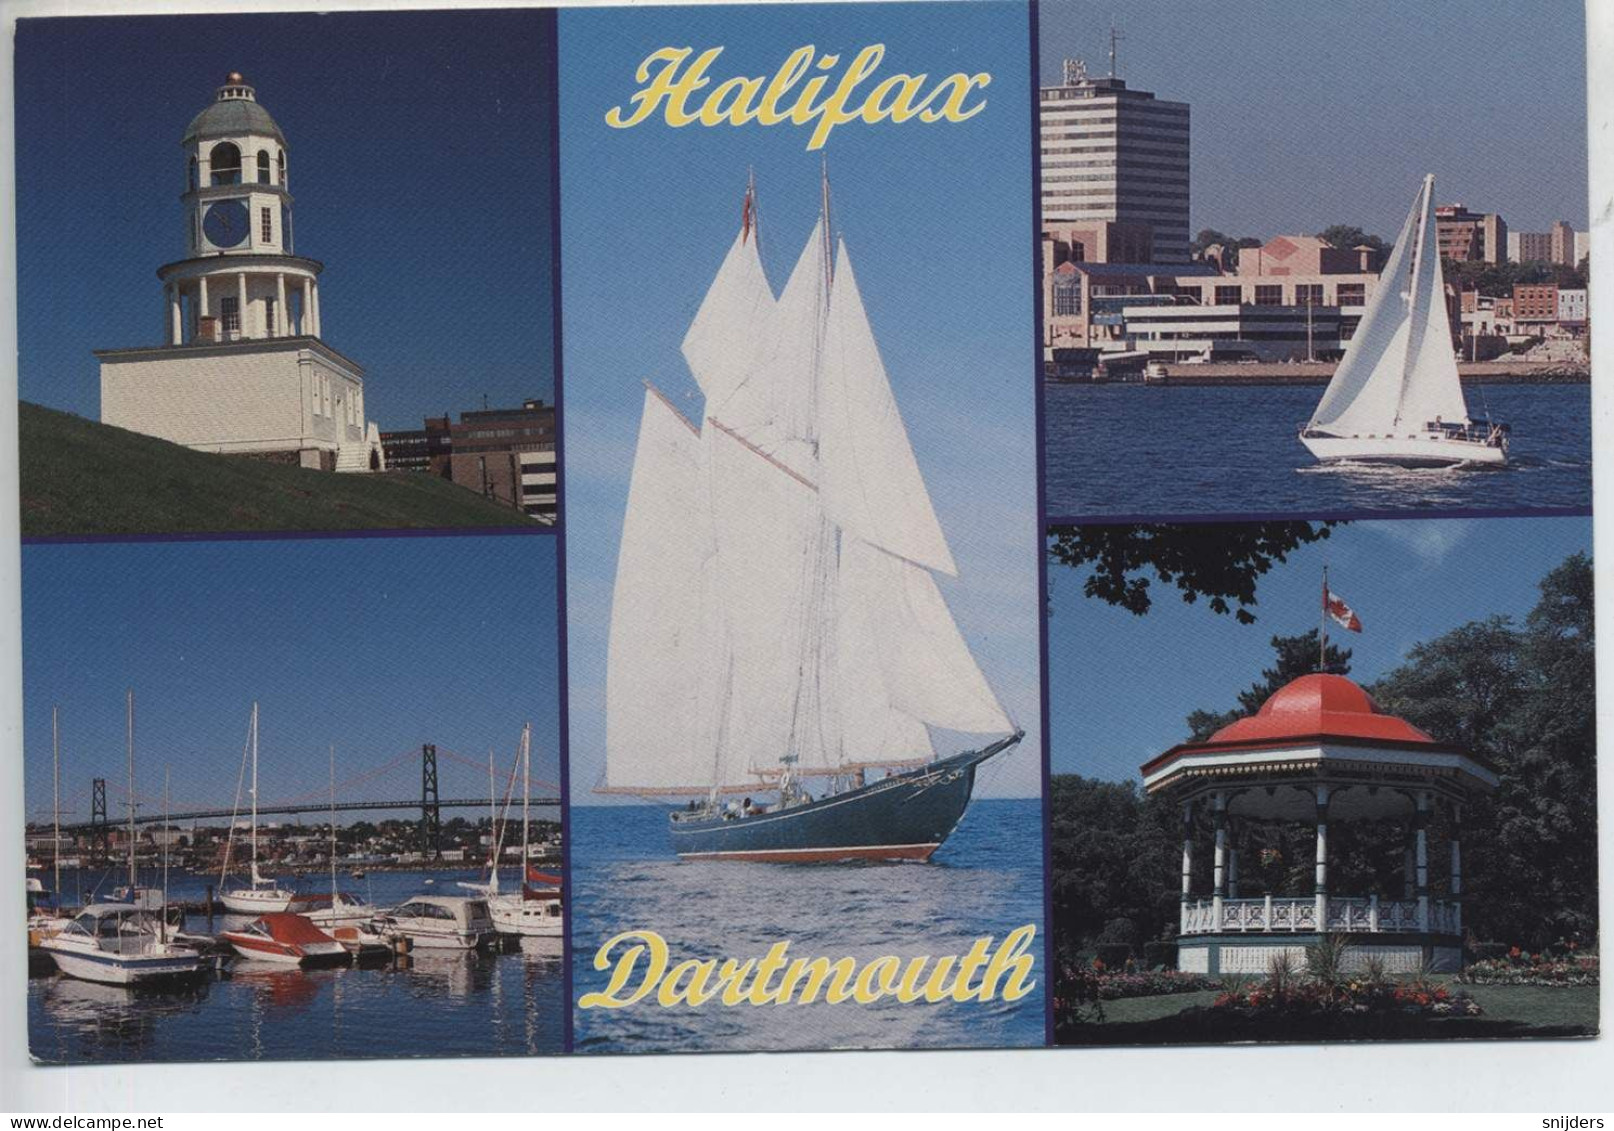 Halifax Dartmouth Multiview Used Sail Boats - Halifax